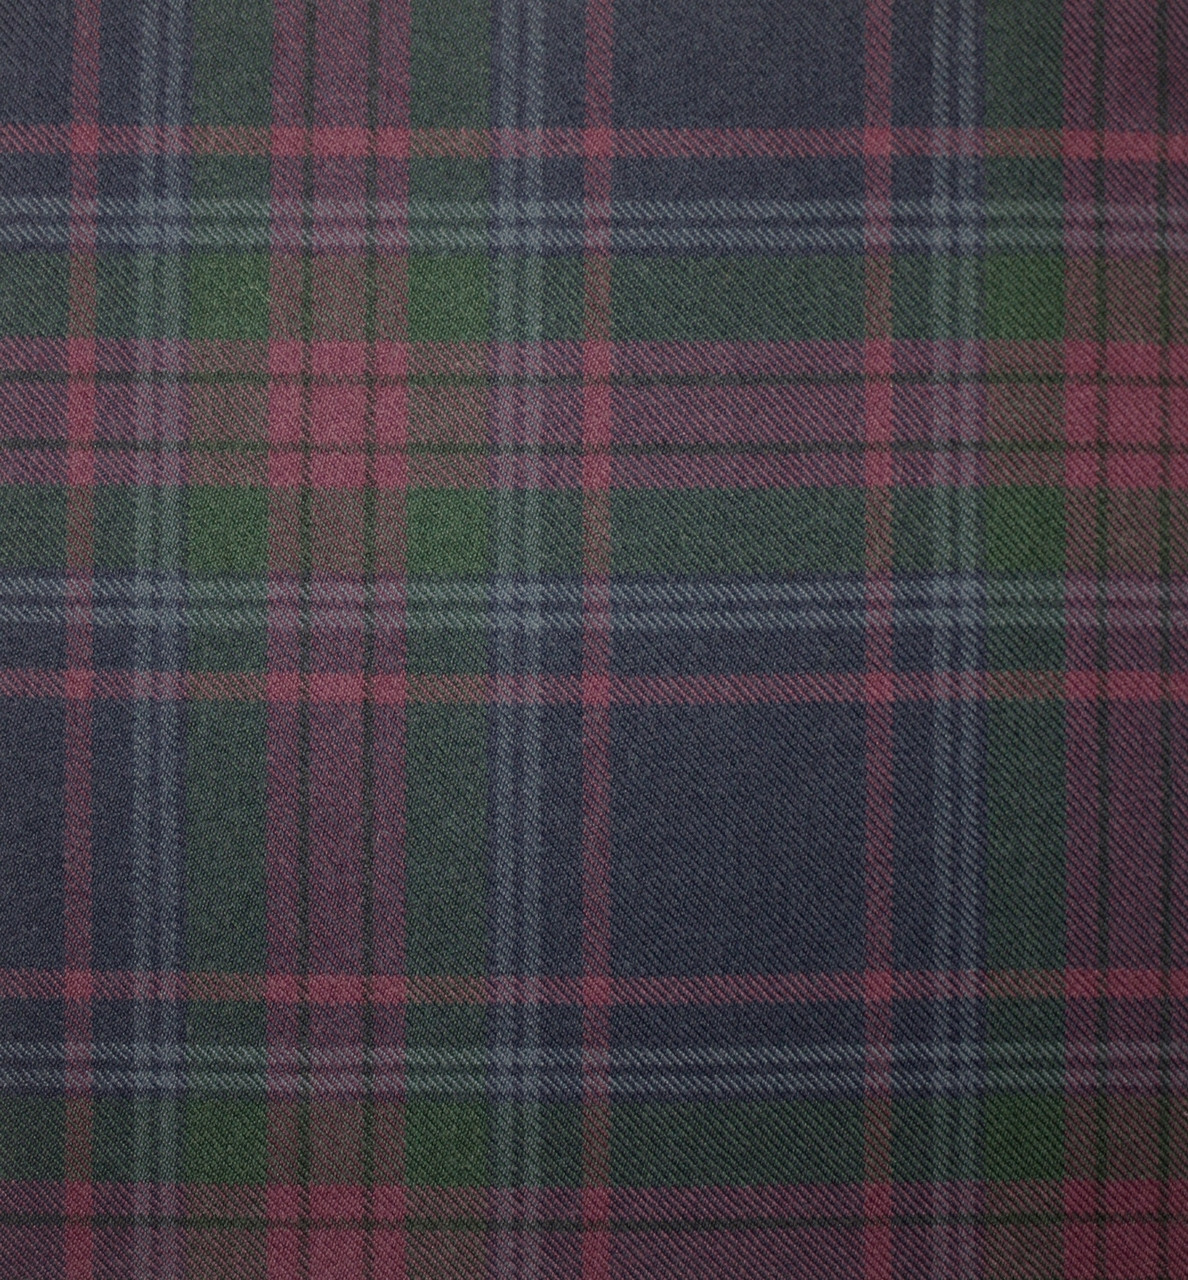 Tartan Fabrics by the Metre, Made in Scotland